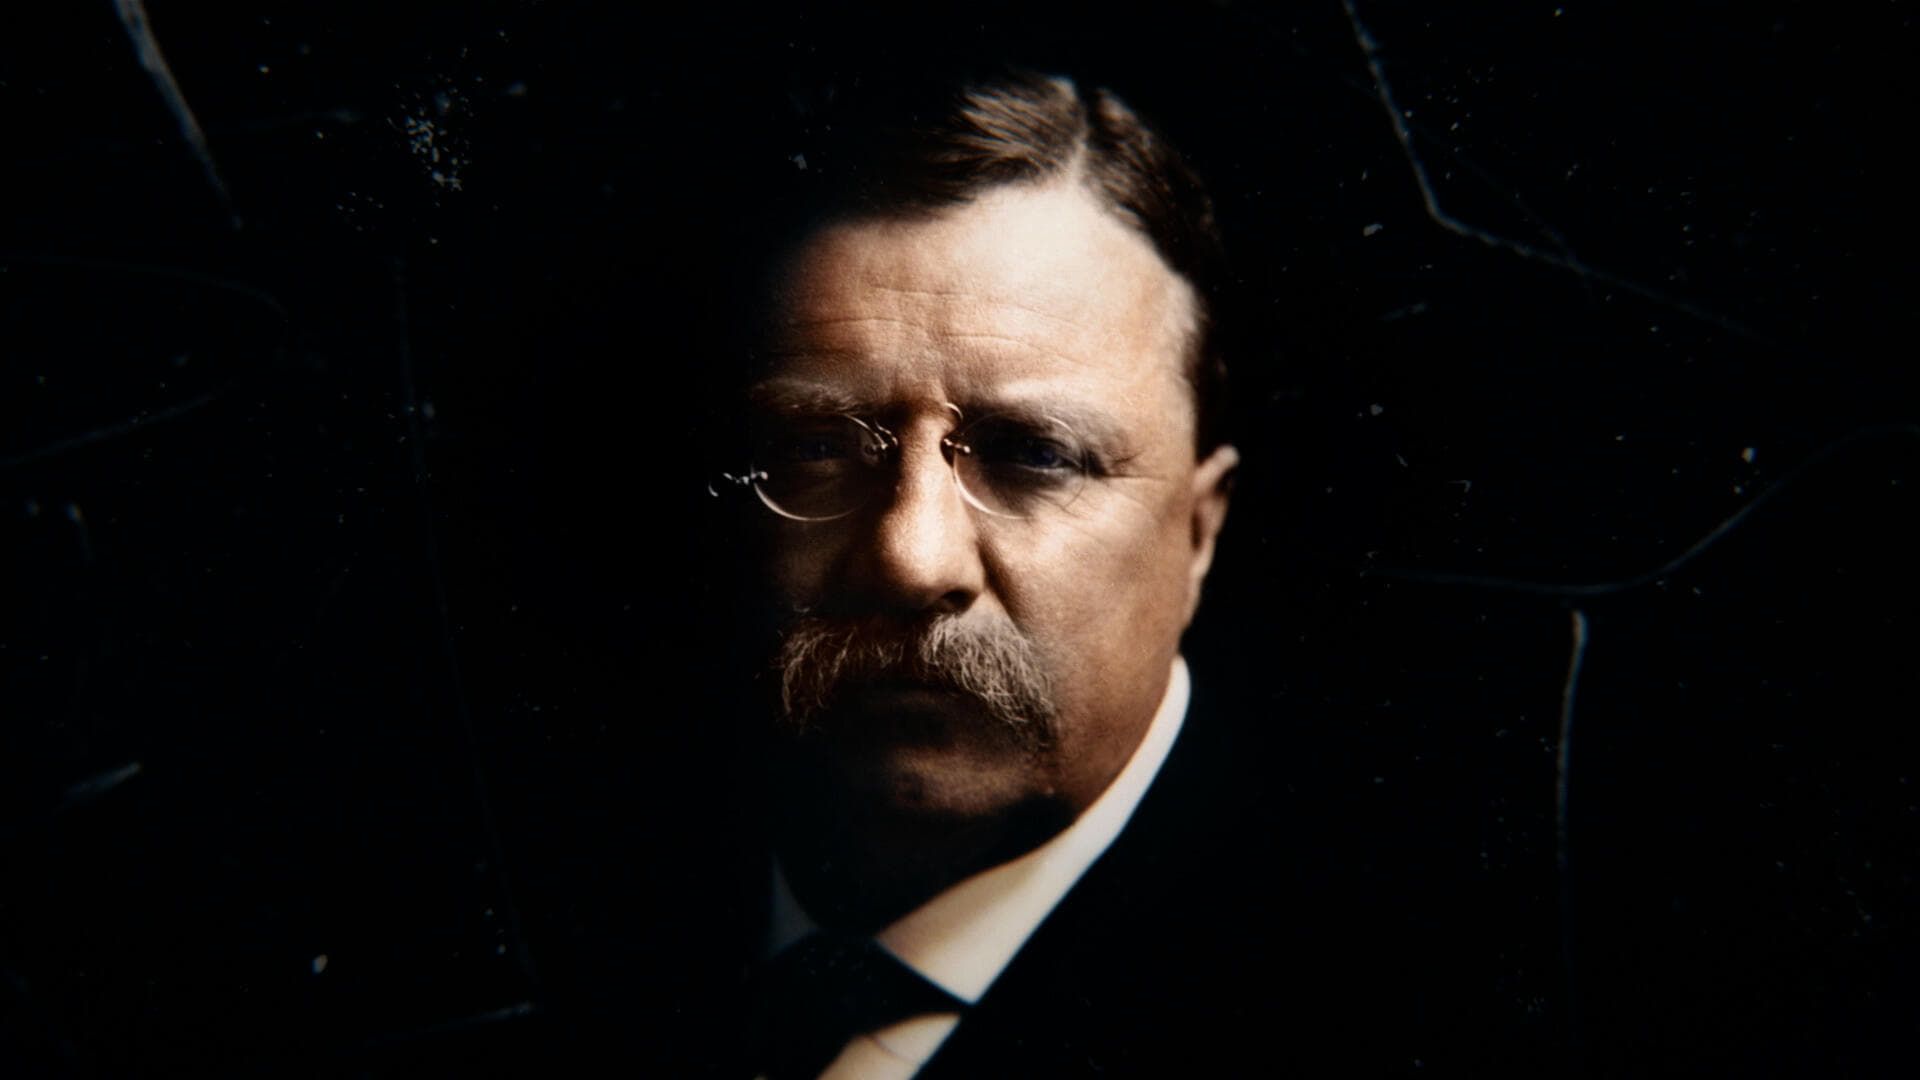 Theodore Roosevelt background